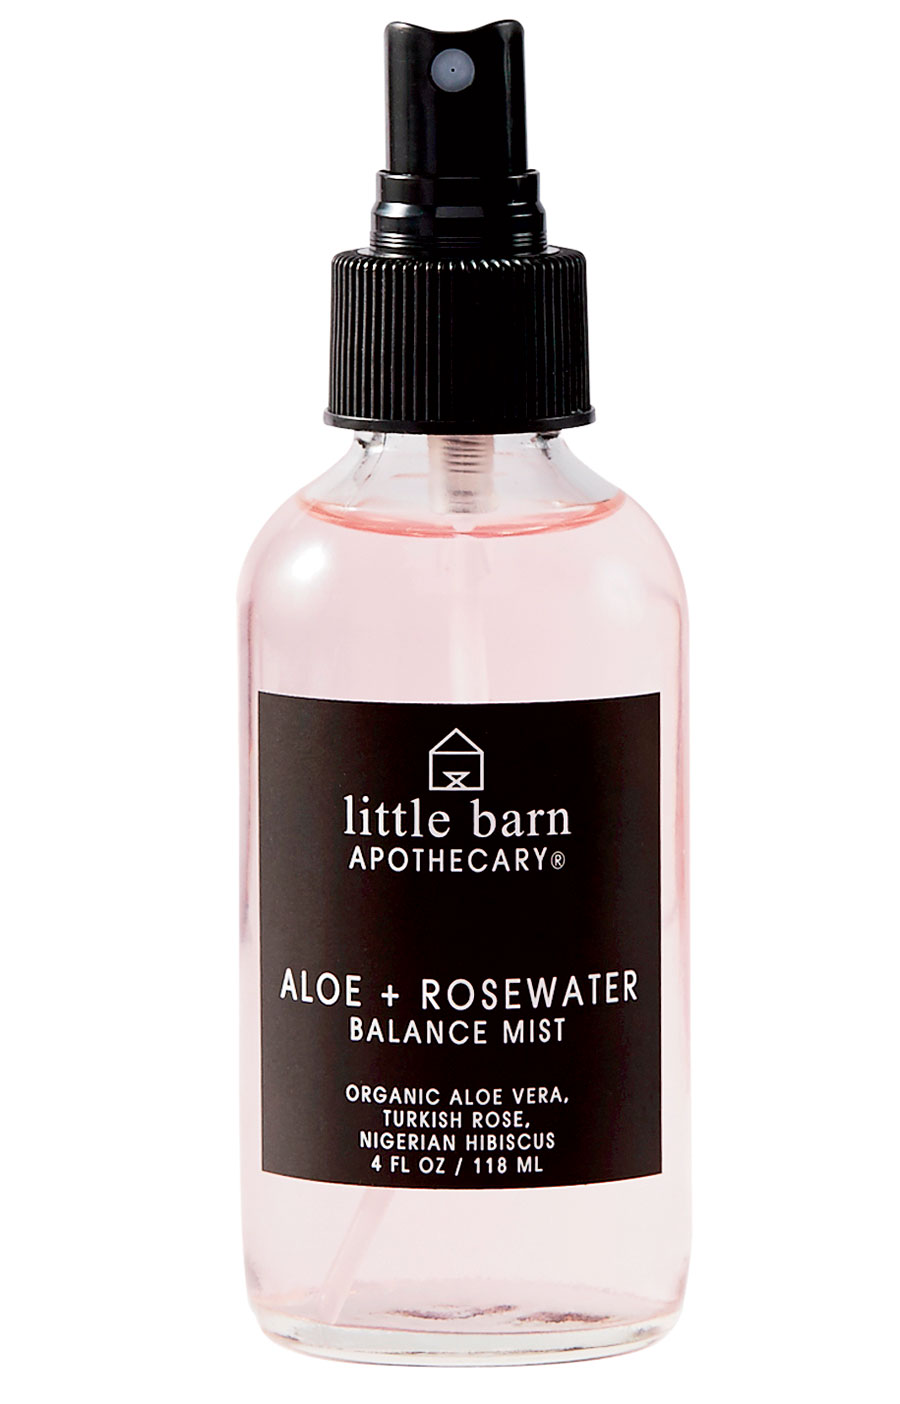 Aloe + Rosewater Balance Mist